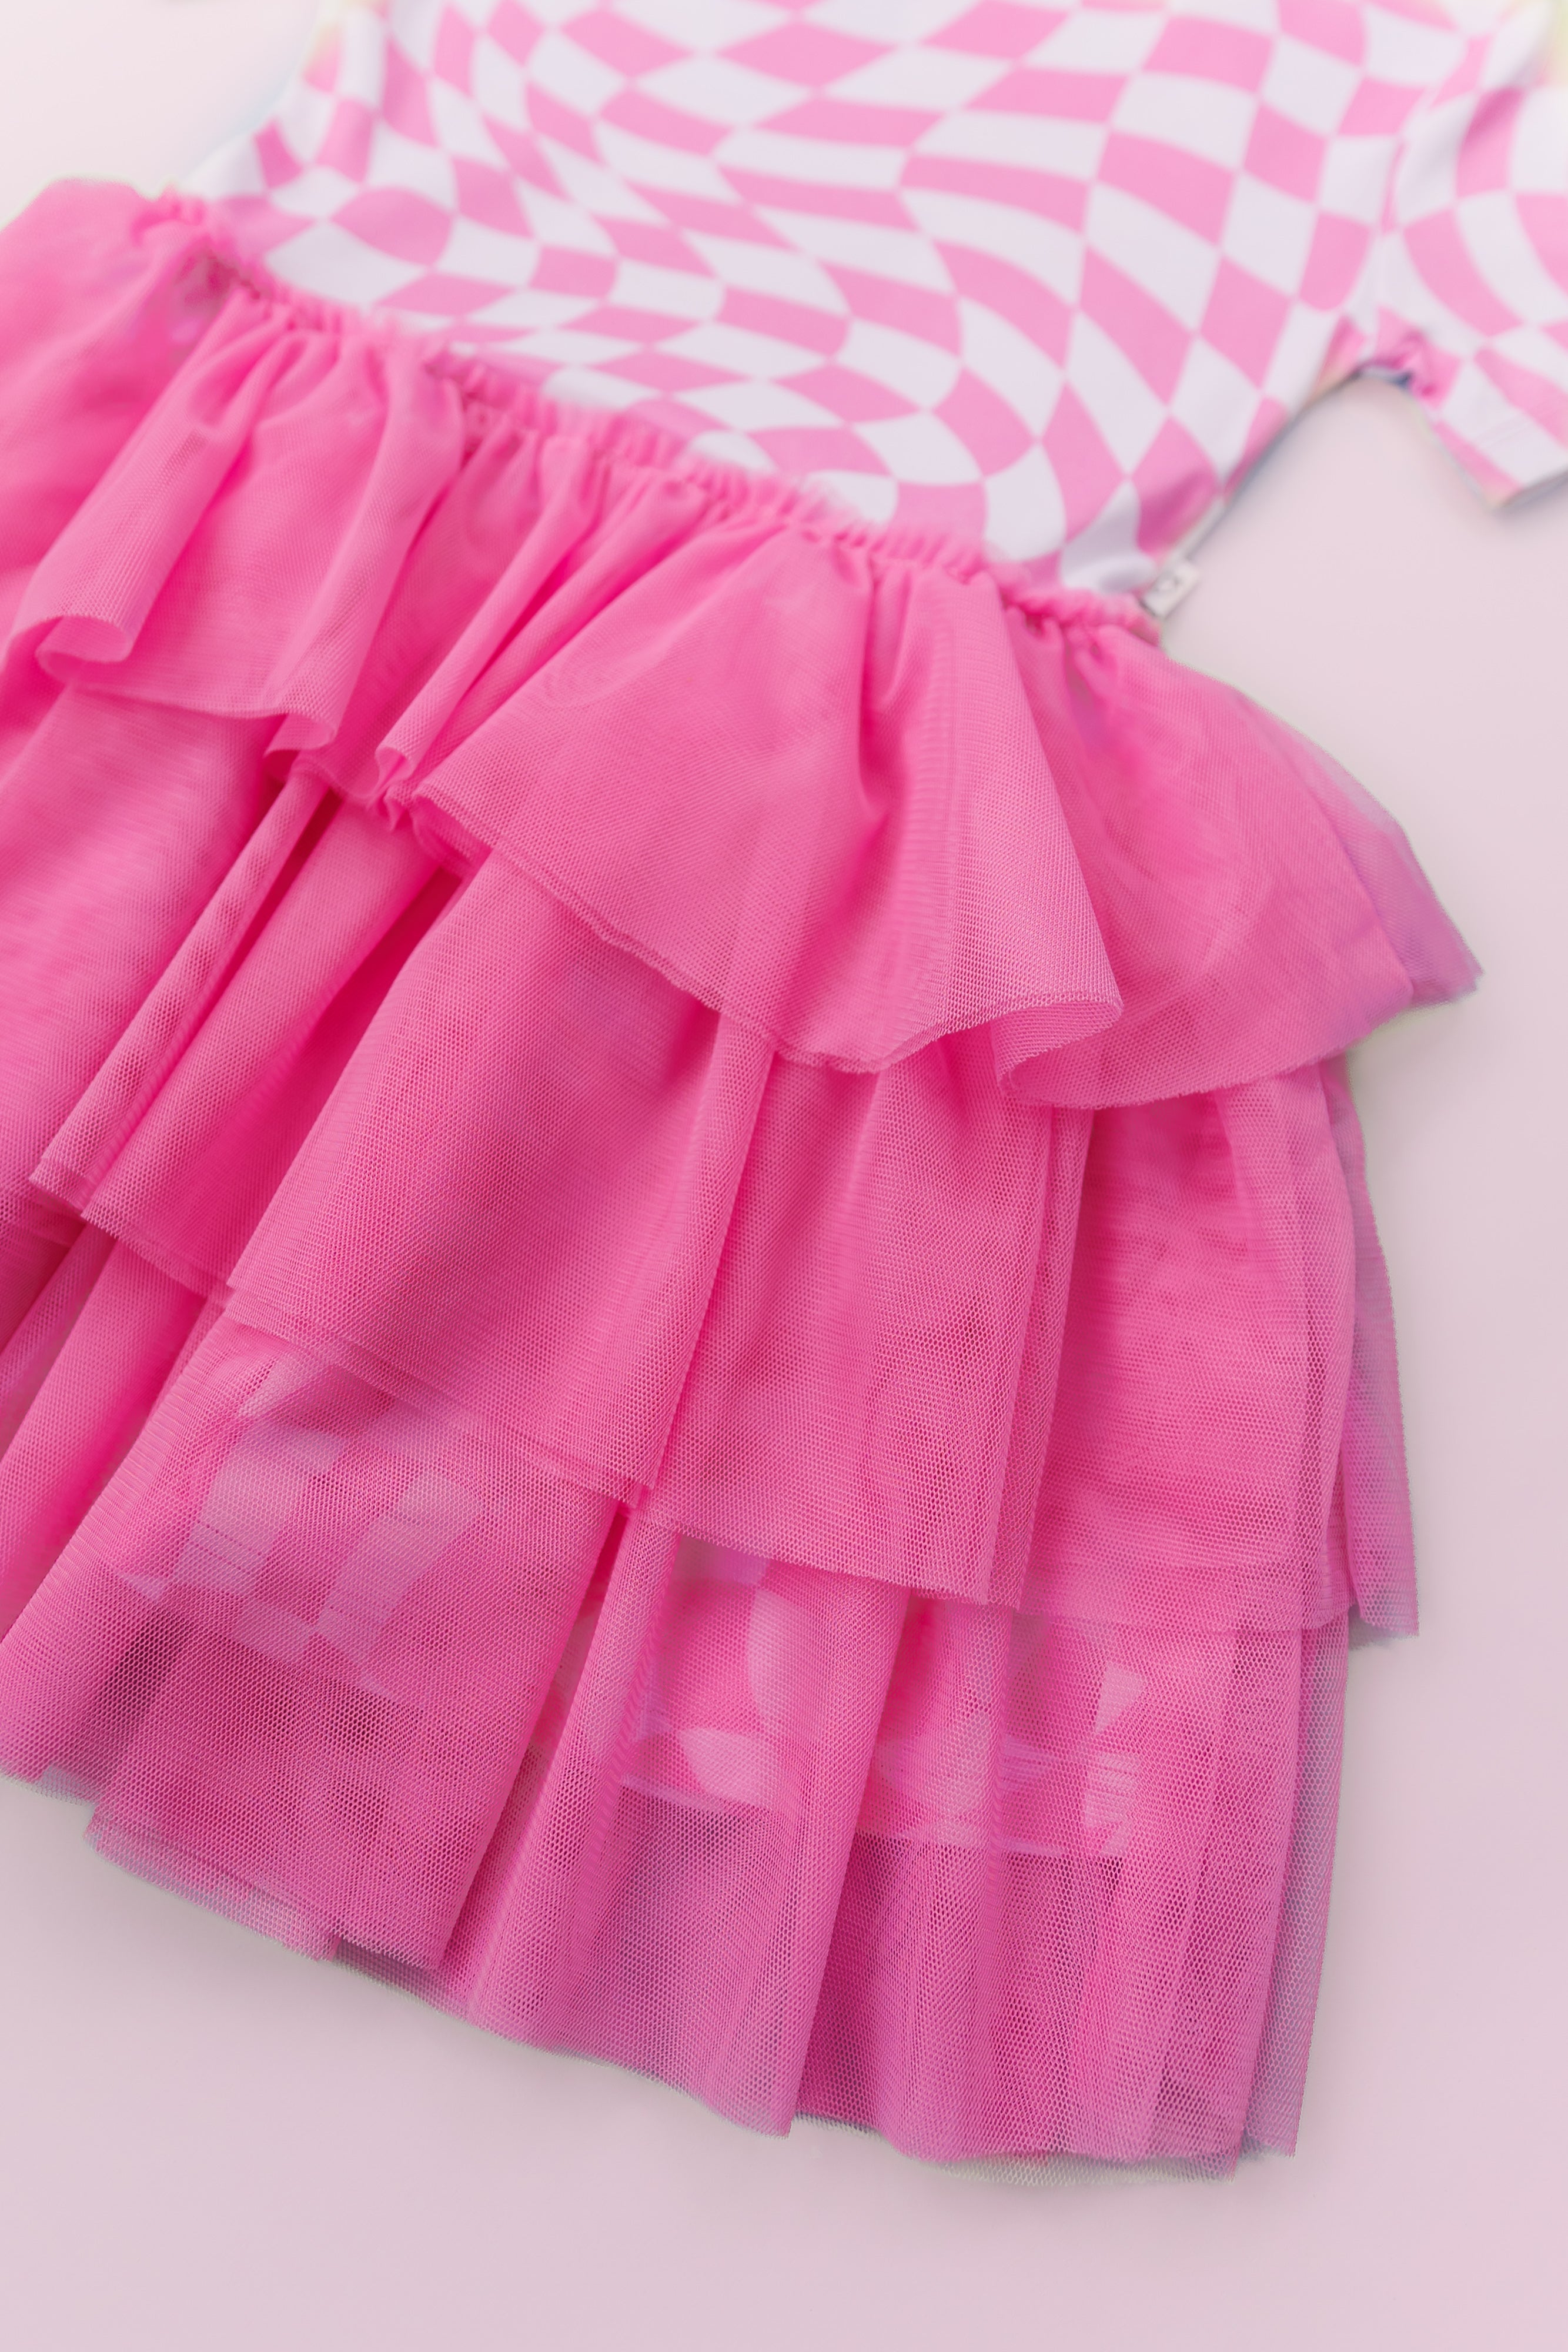 Bubblegum Wavey Checkers Dream Tutu Dress